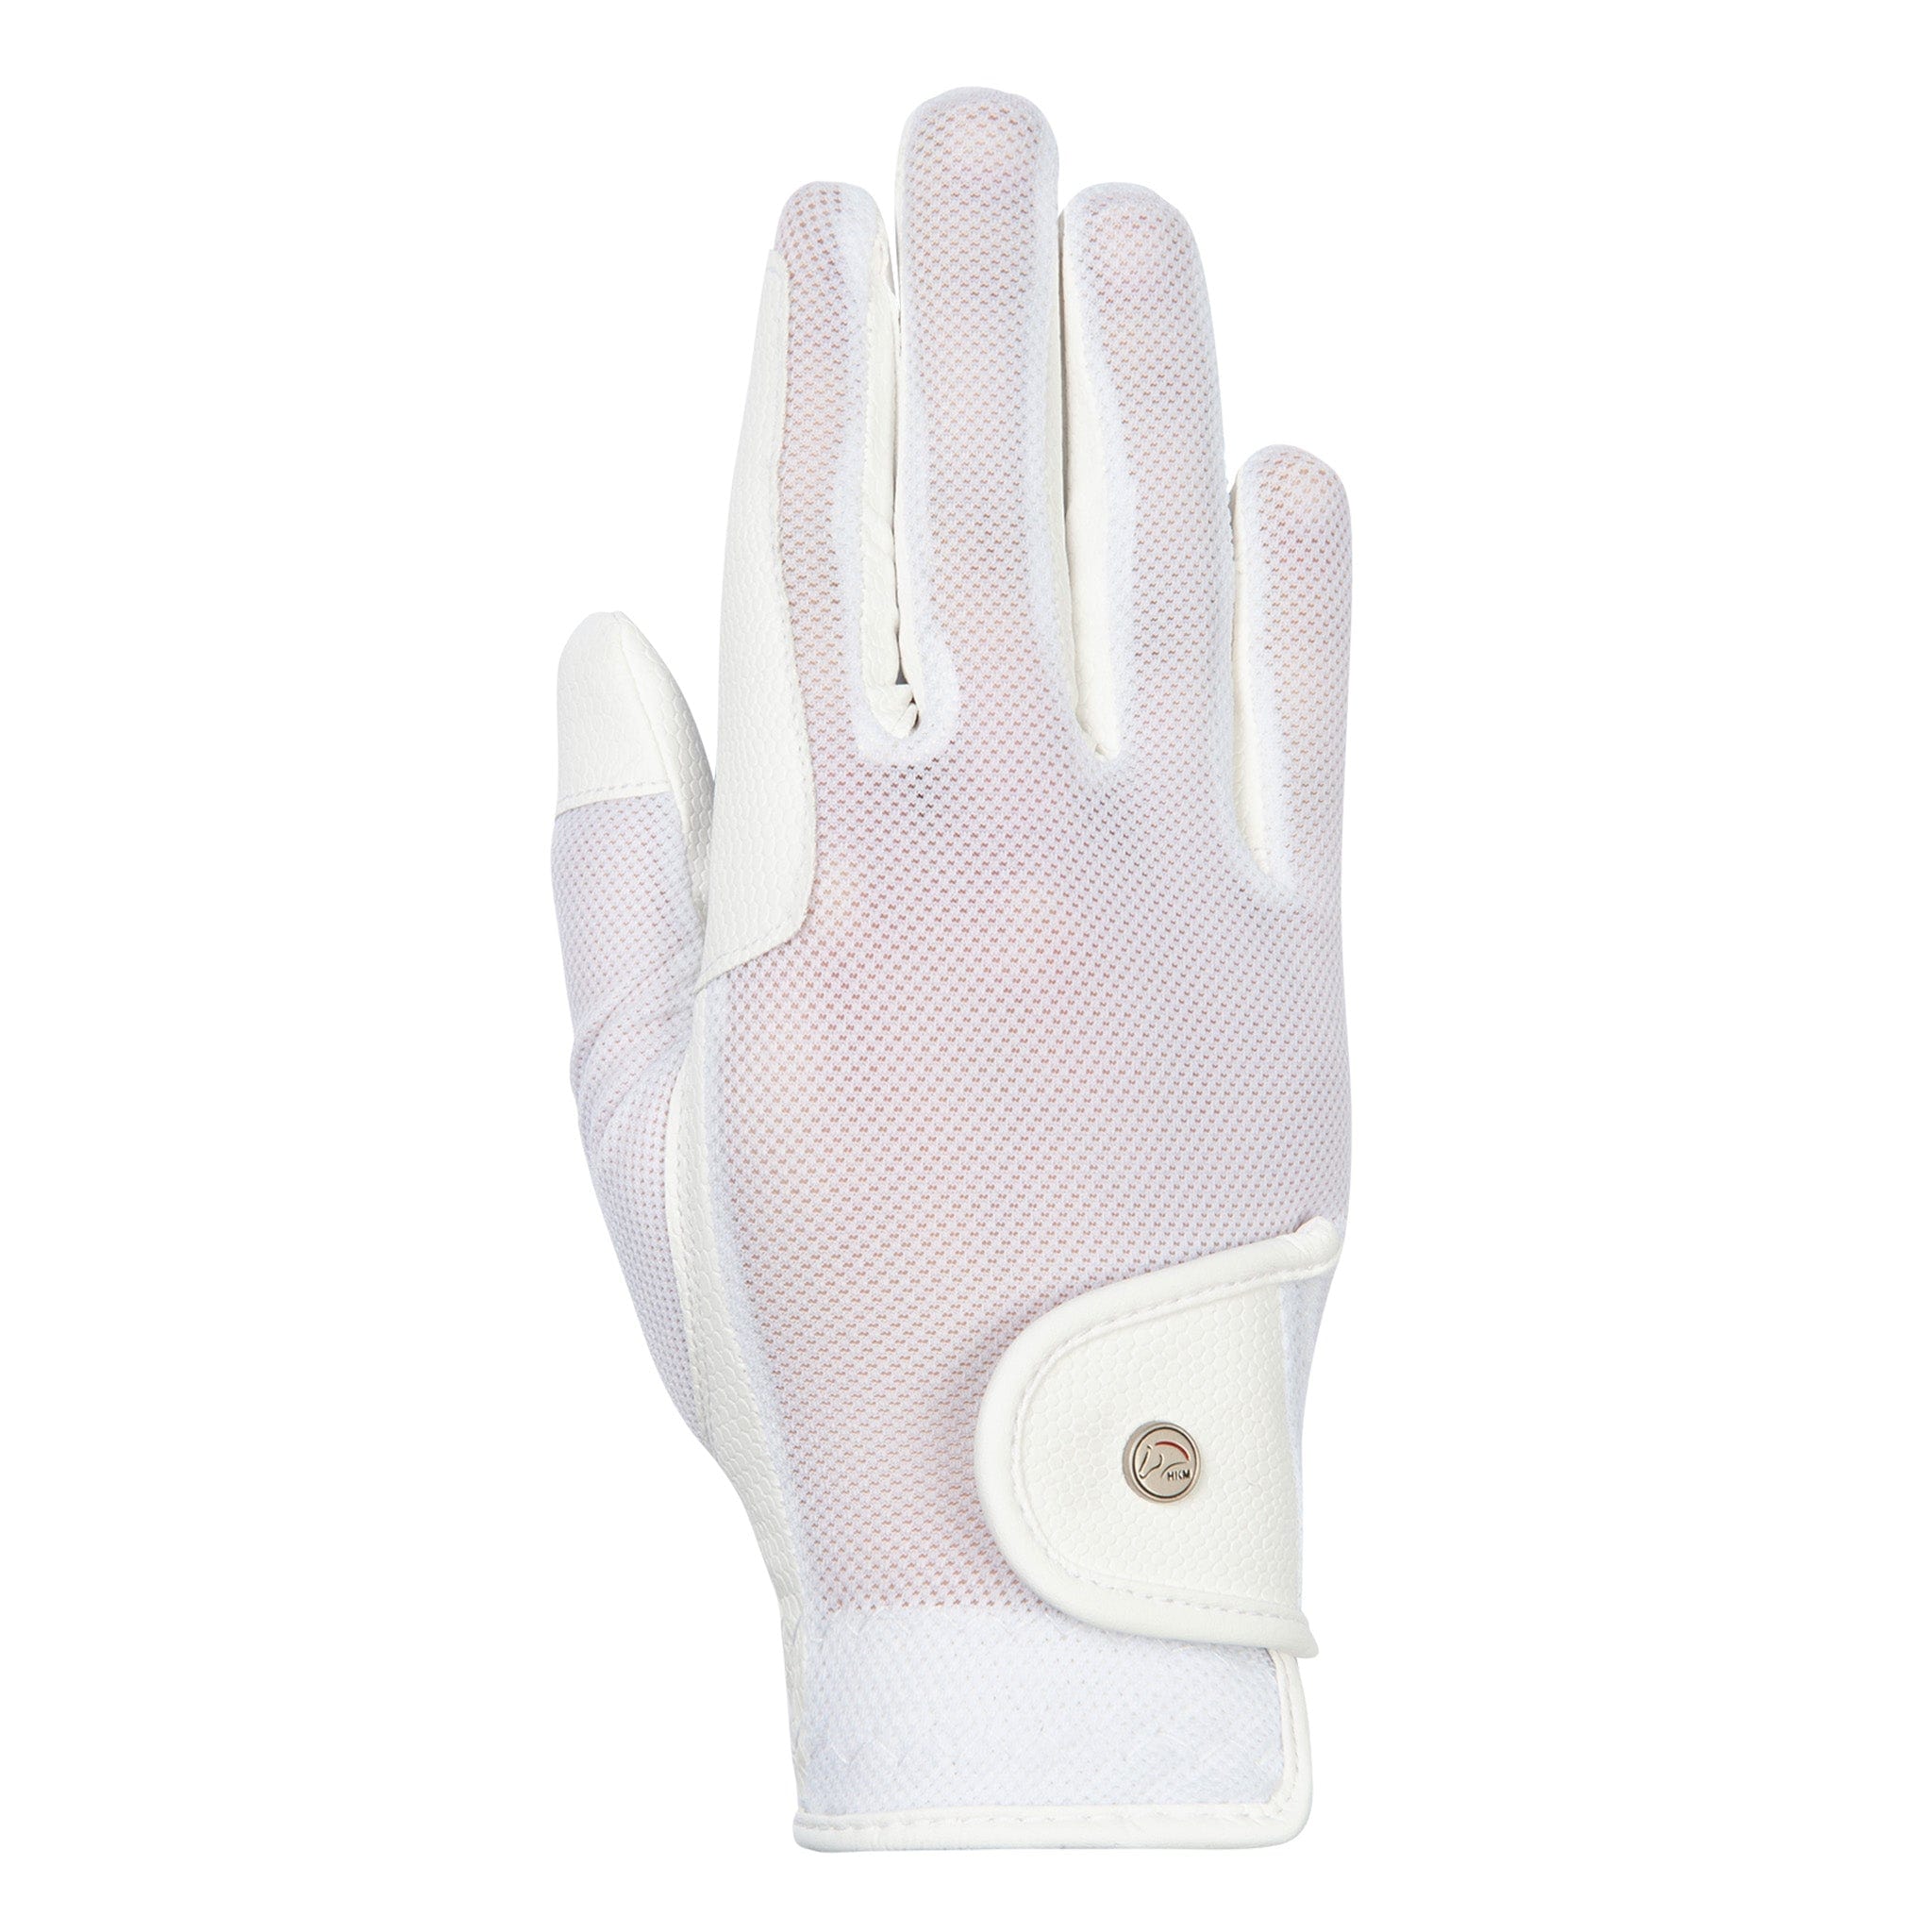 HKM Style Summer Riding Gloves 12453 White Back Hand Mesh